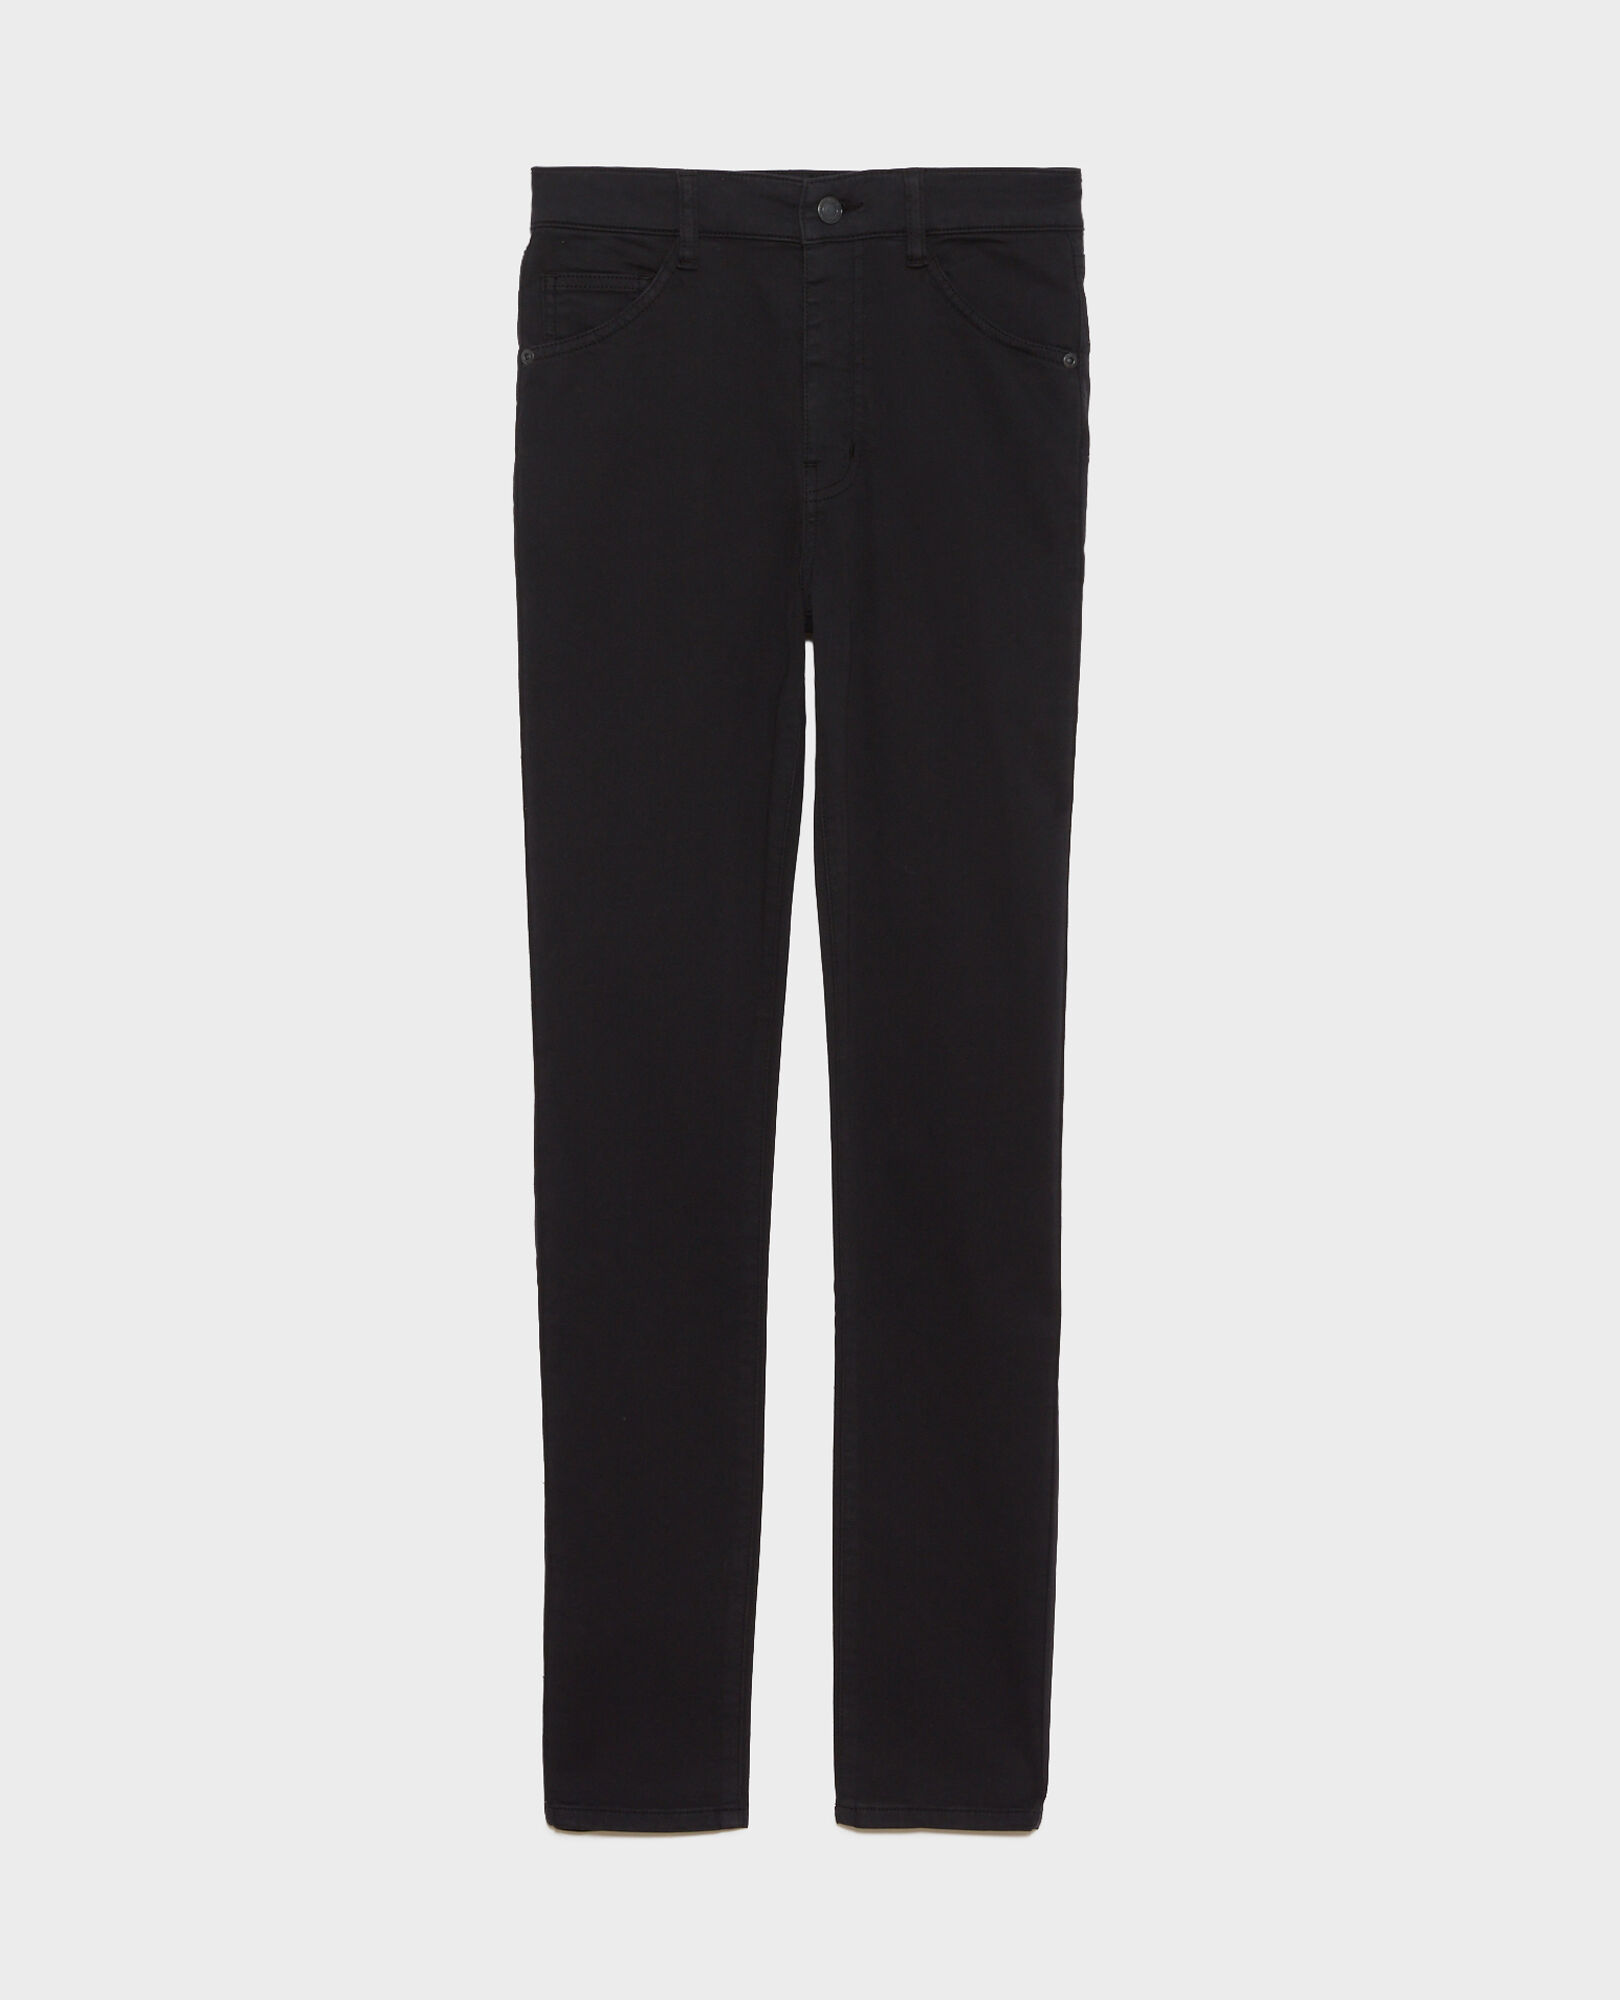 DANI - SKINNY - High-waisted 5 pocket jeans Black beauty Pozakiny